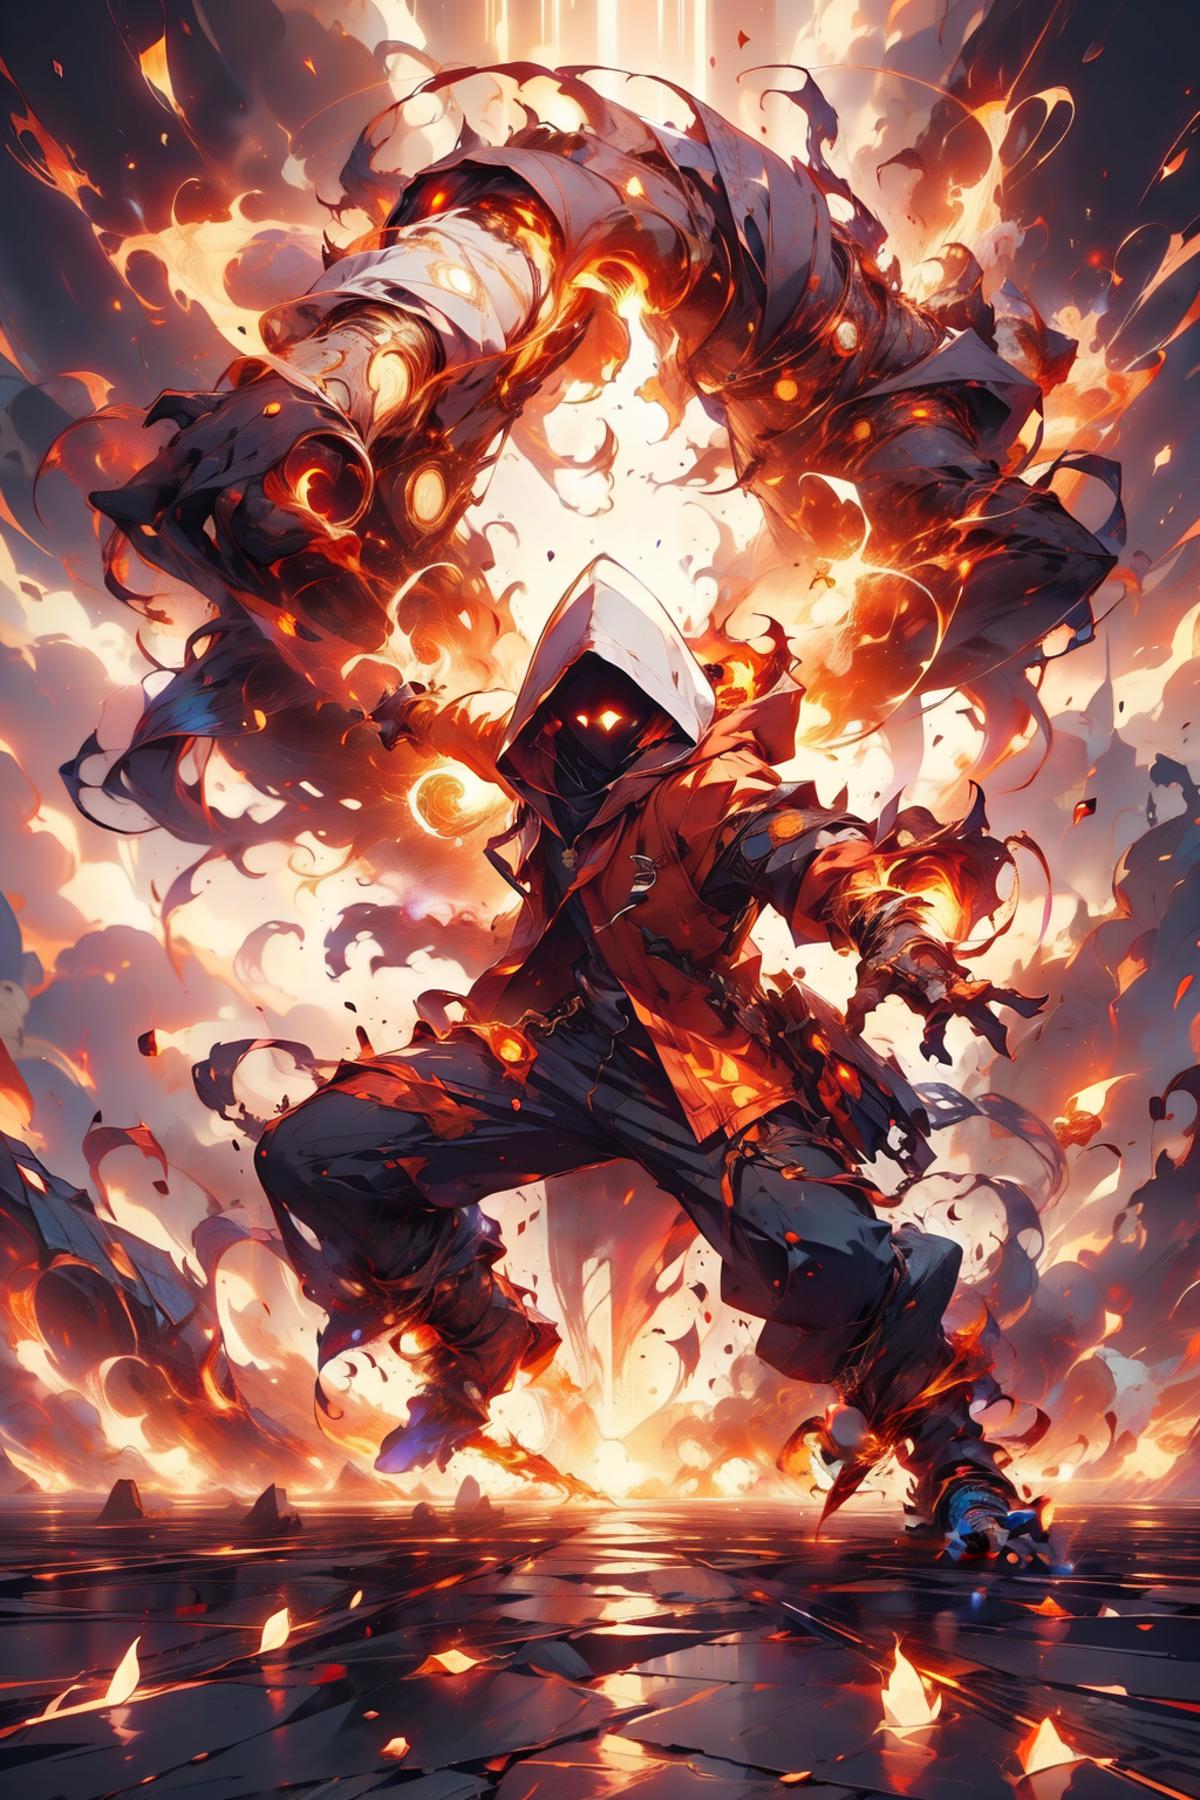 Explosion magic - Grimoire image by Aesonne